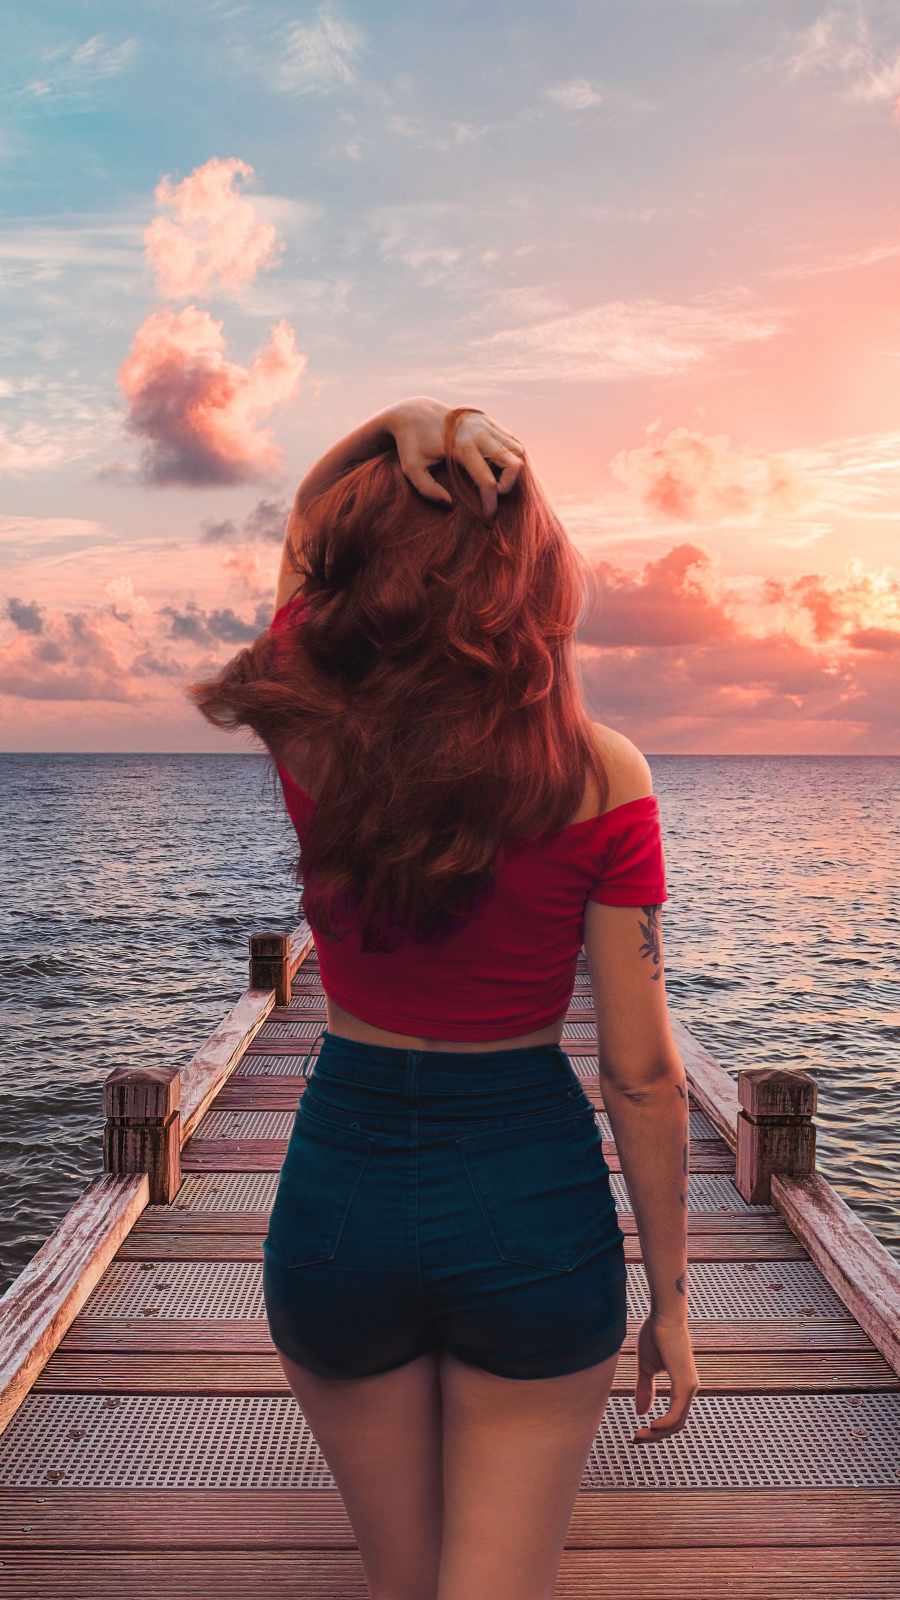 Girl and Ocean iPhone Wallpaper